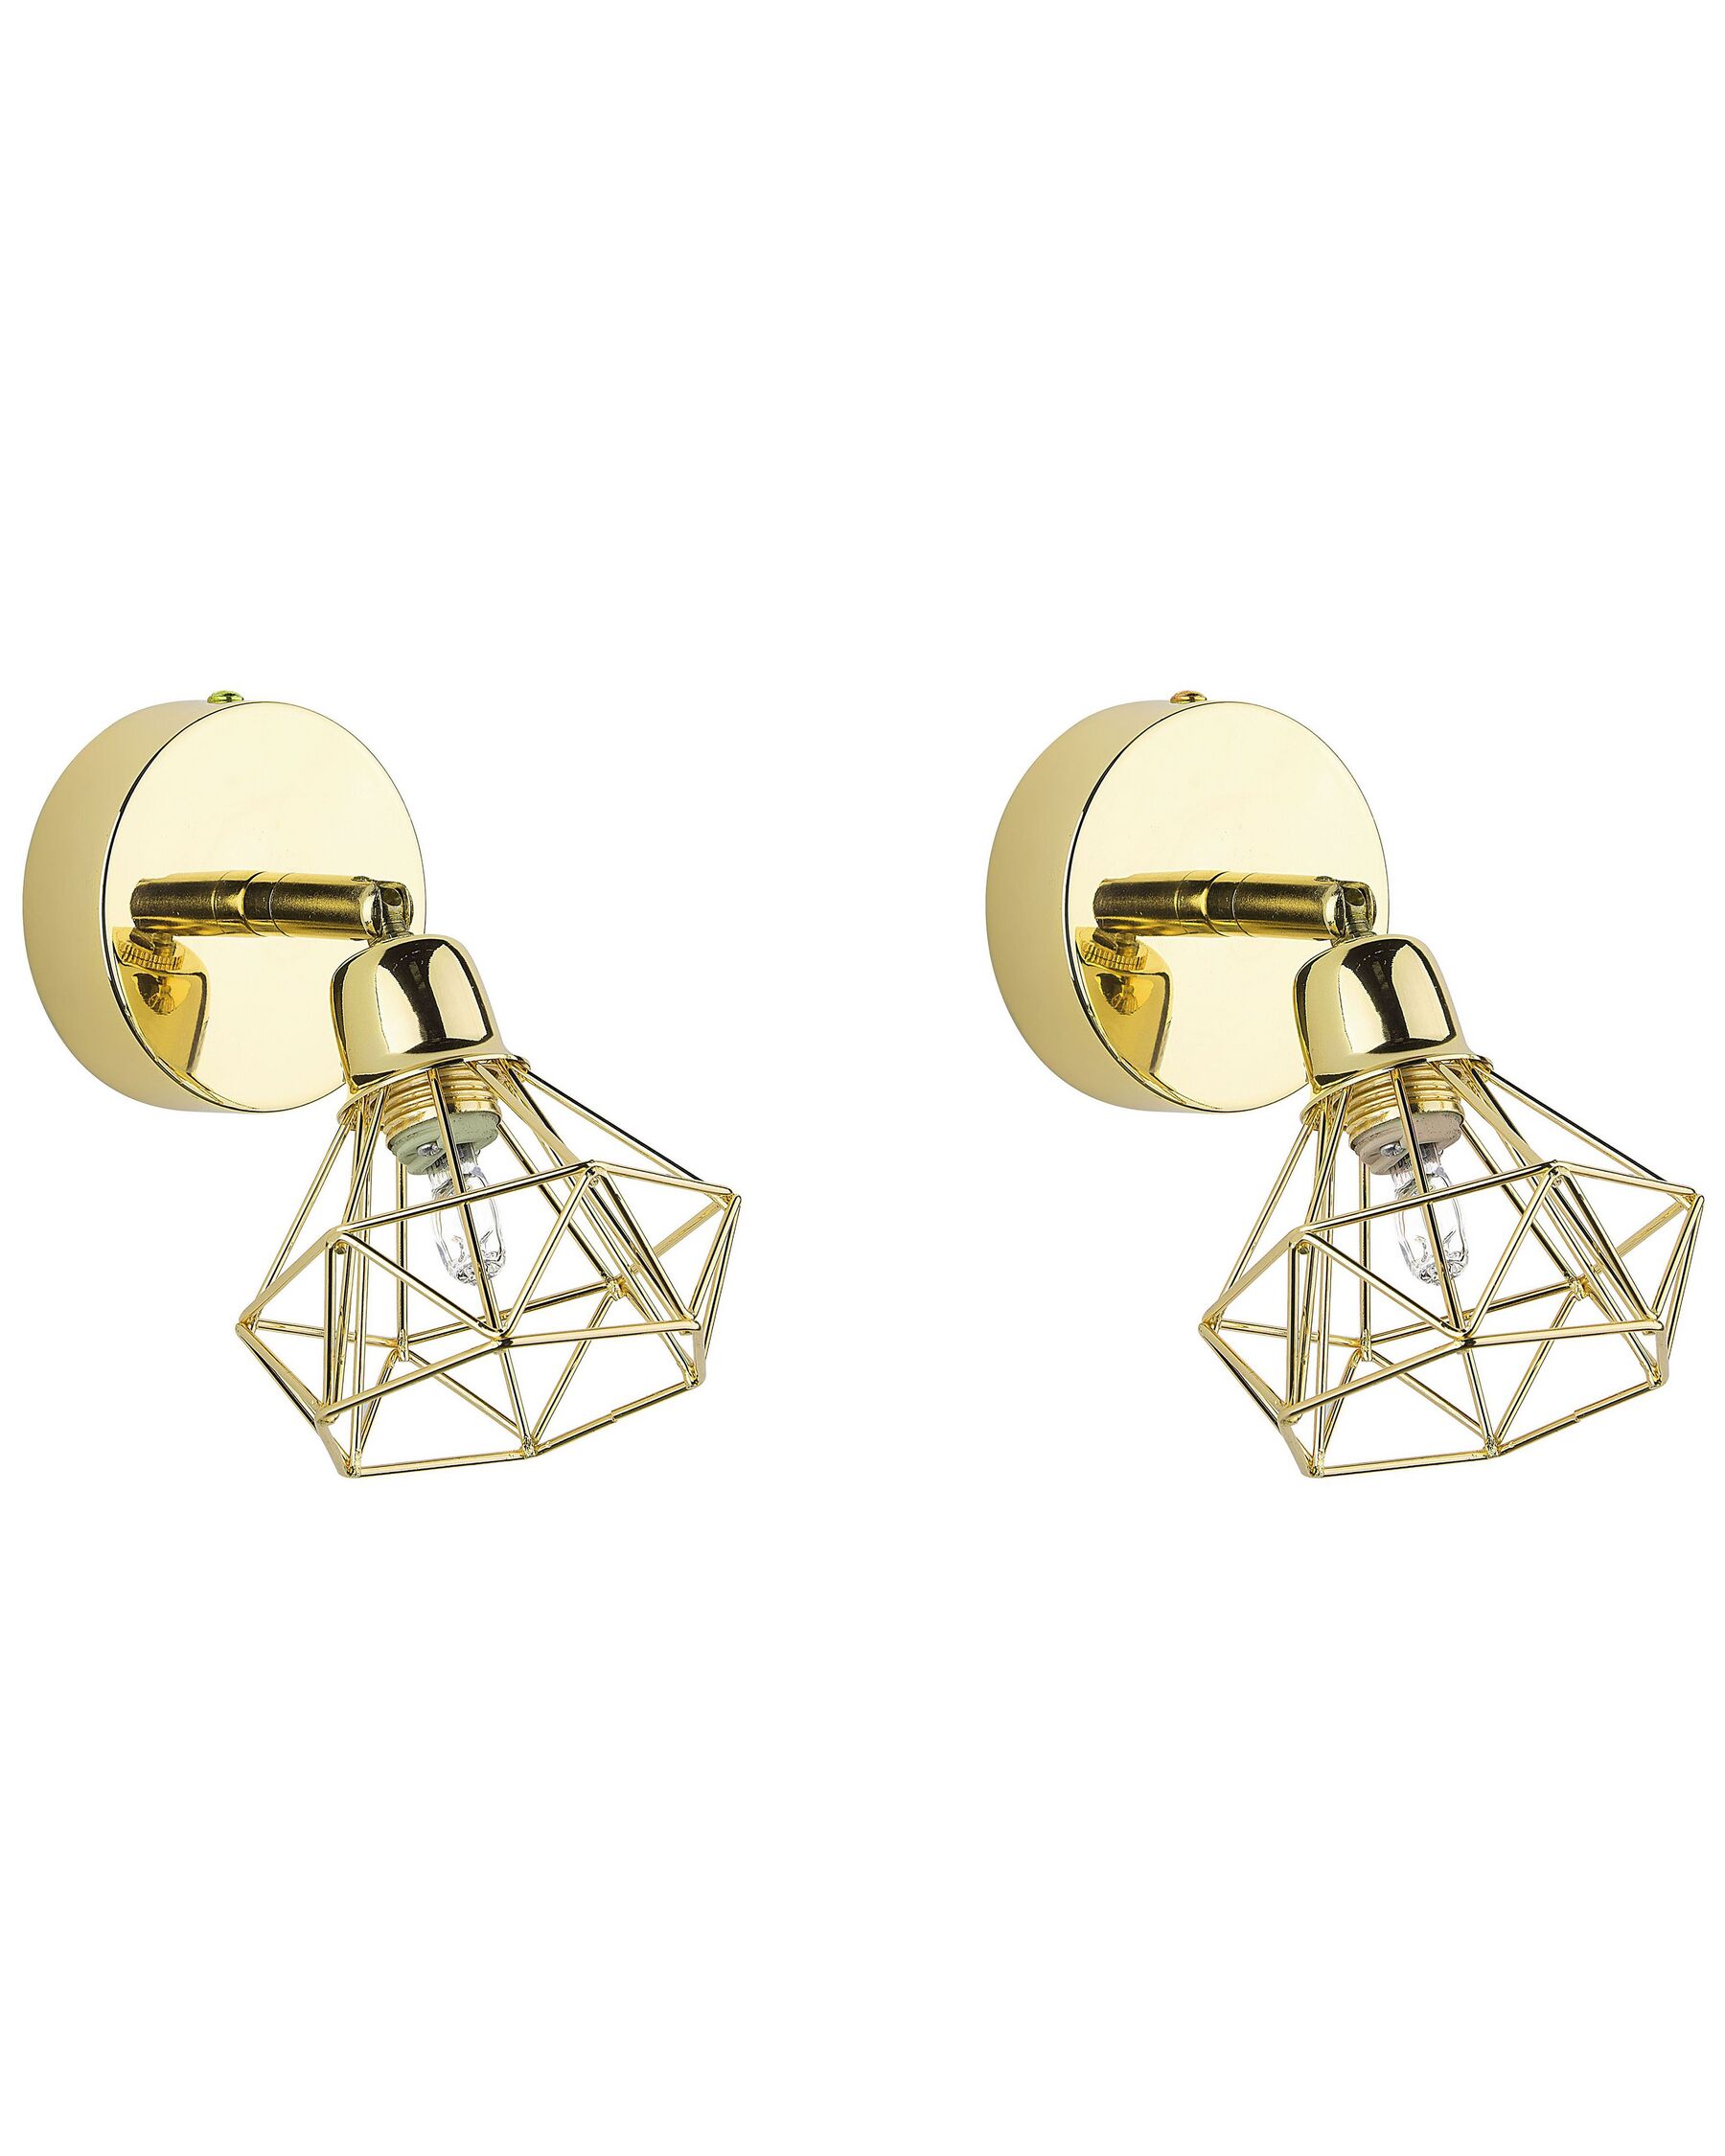 Moderne Wandlampe Metall Lampenschirm in Diamantenform gold 2er Set Erma 